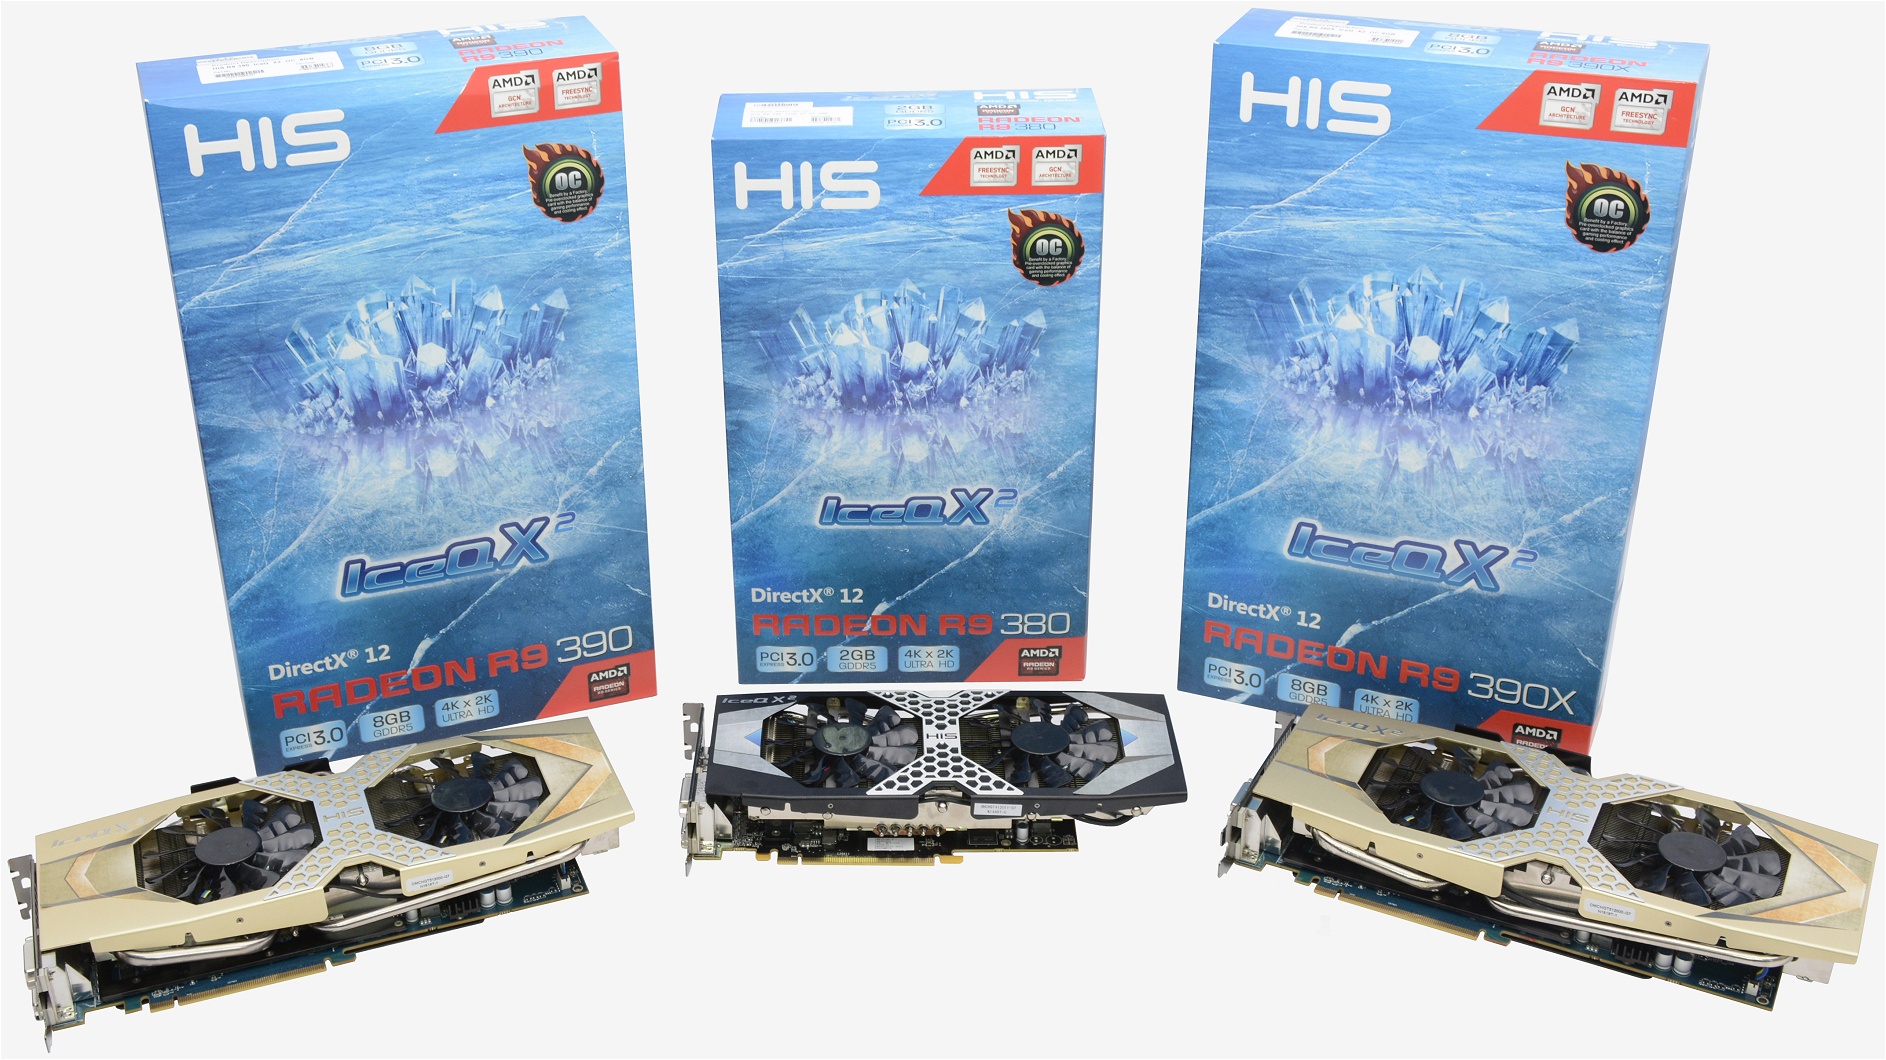 HIS IceQ X² OC Radeon R9 390X, R9 390 R9 380 Review | TechSpot